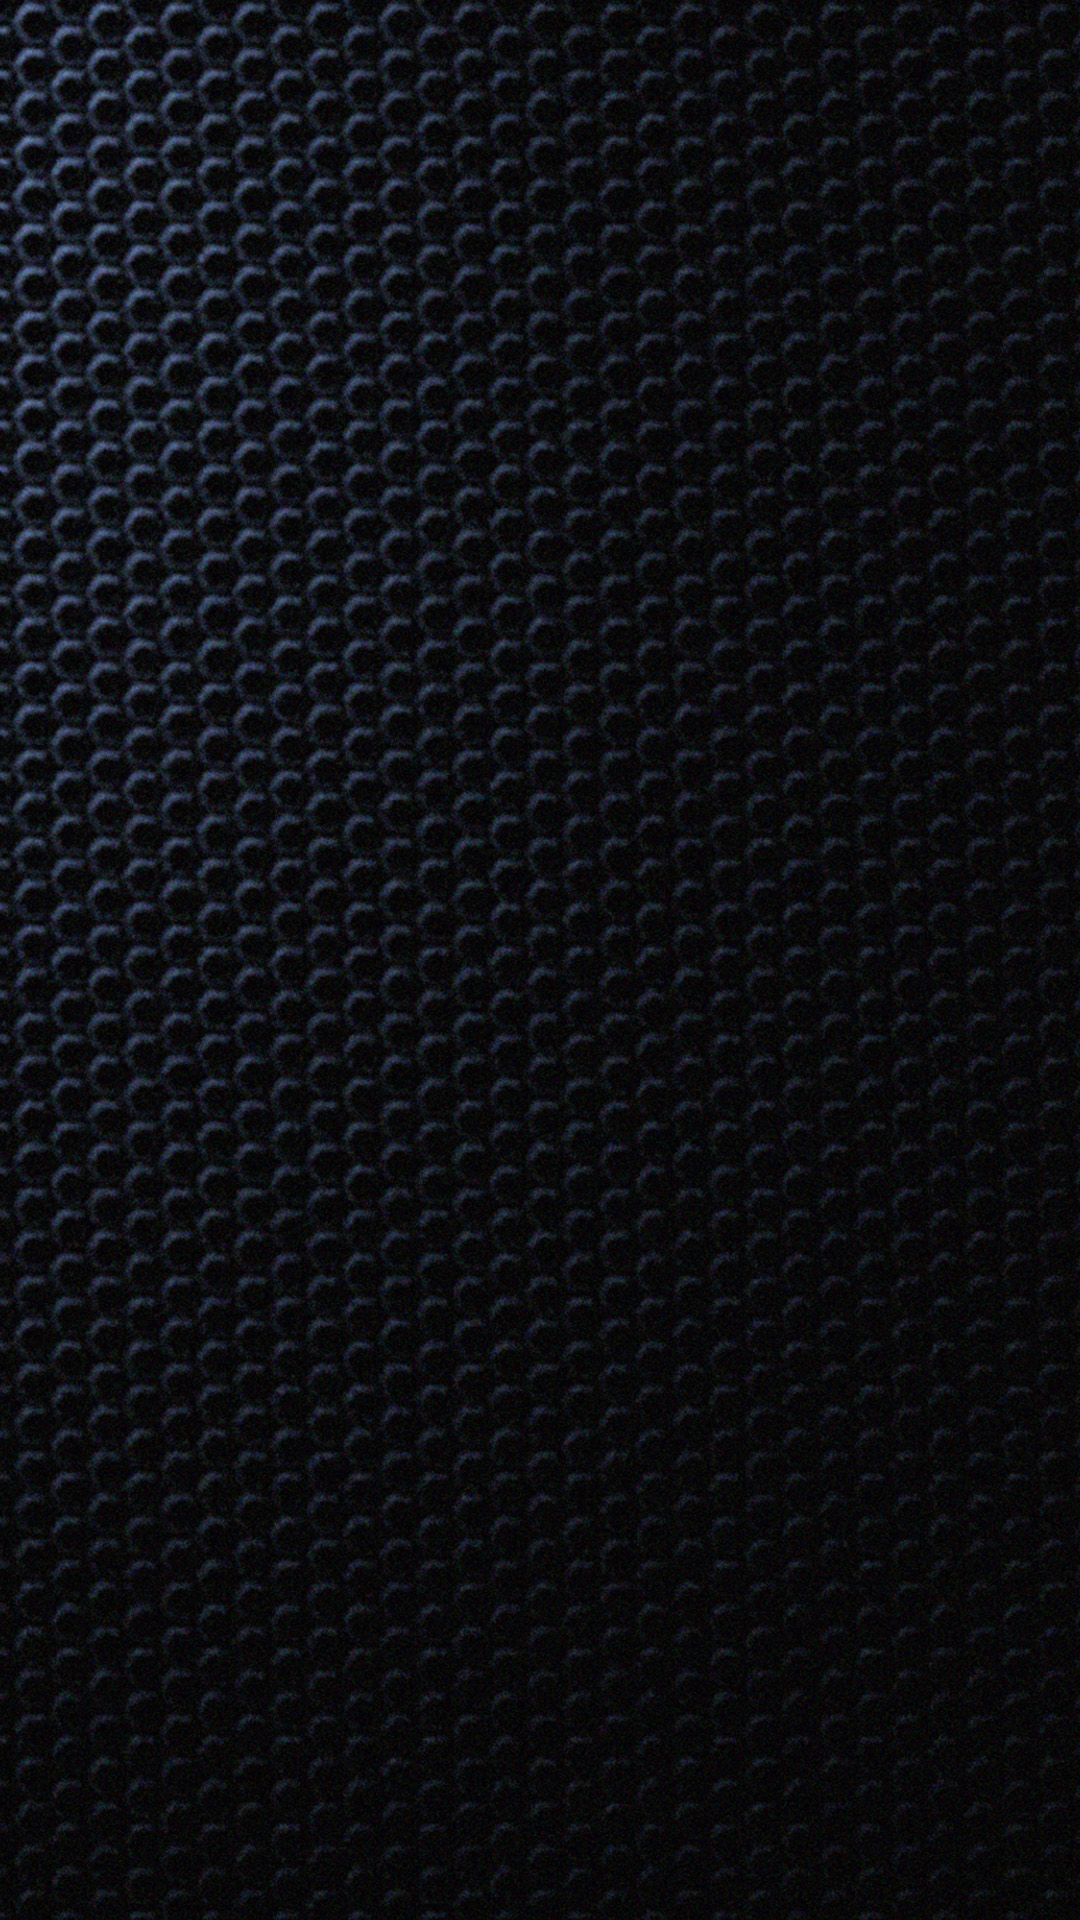  38 Black  Galaxy Wallpaper  on WallpaperSafari